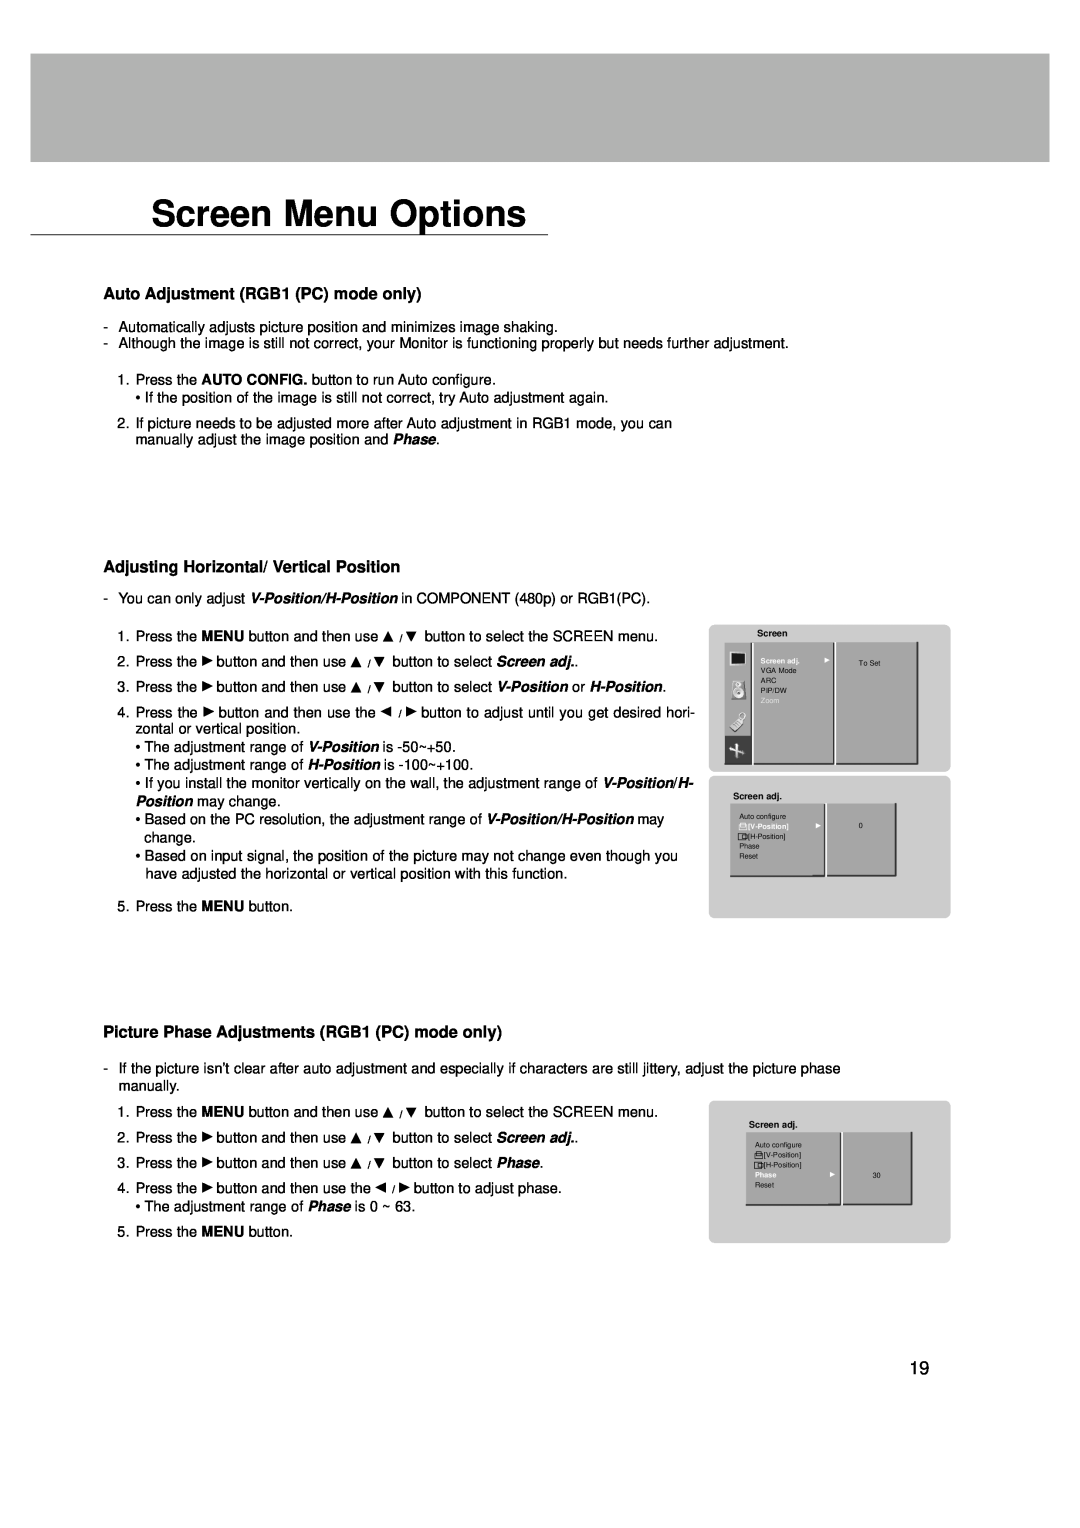 LG Electronics MZ-42PZ42V Screen Menu Options, Auto Adjustment RGB1 PC mode only, Adjusting Horizontal/ Vertical Position 